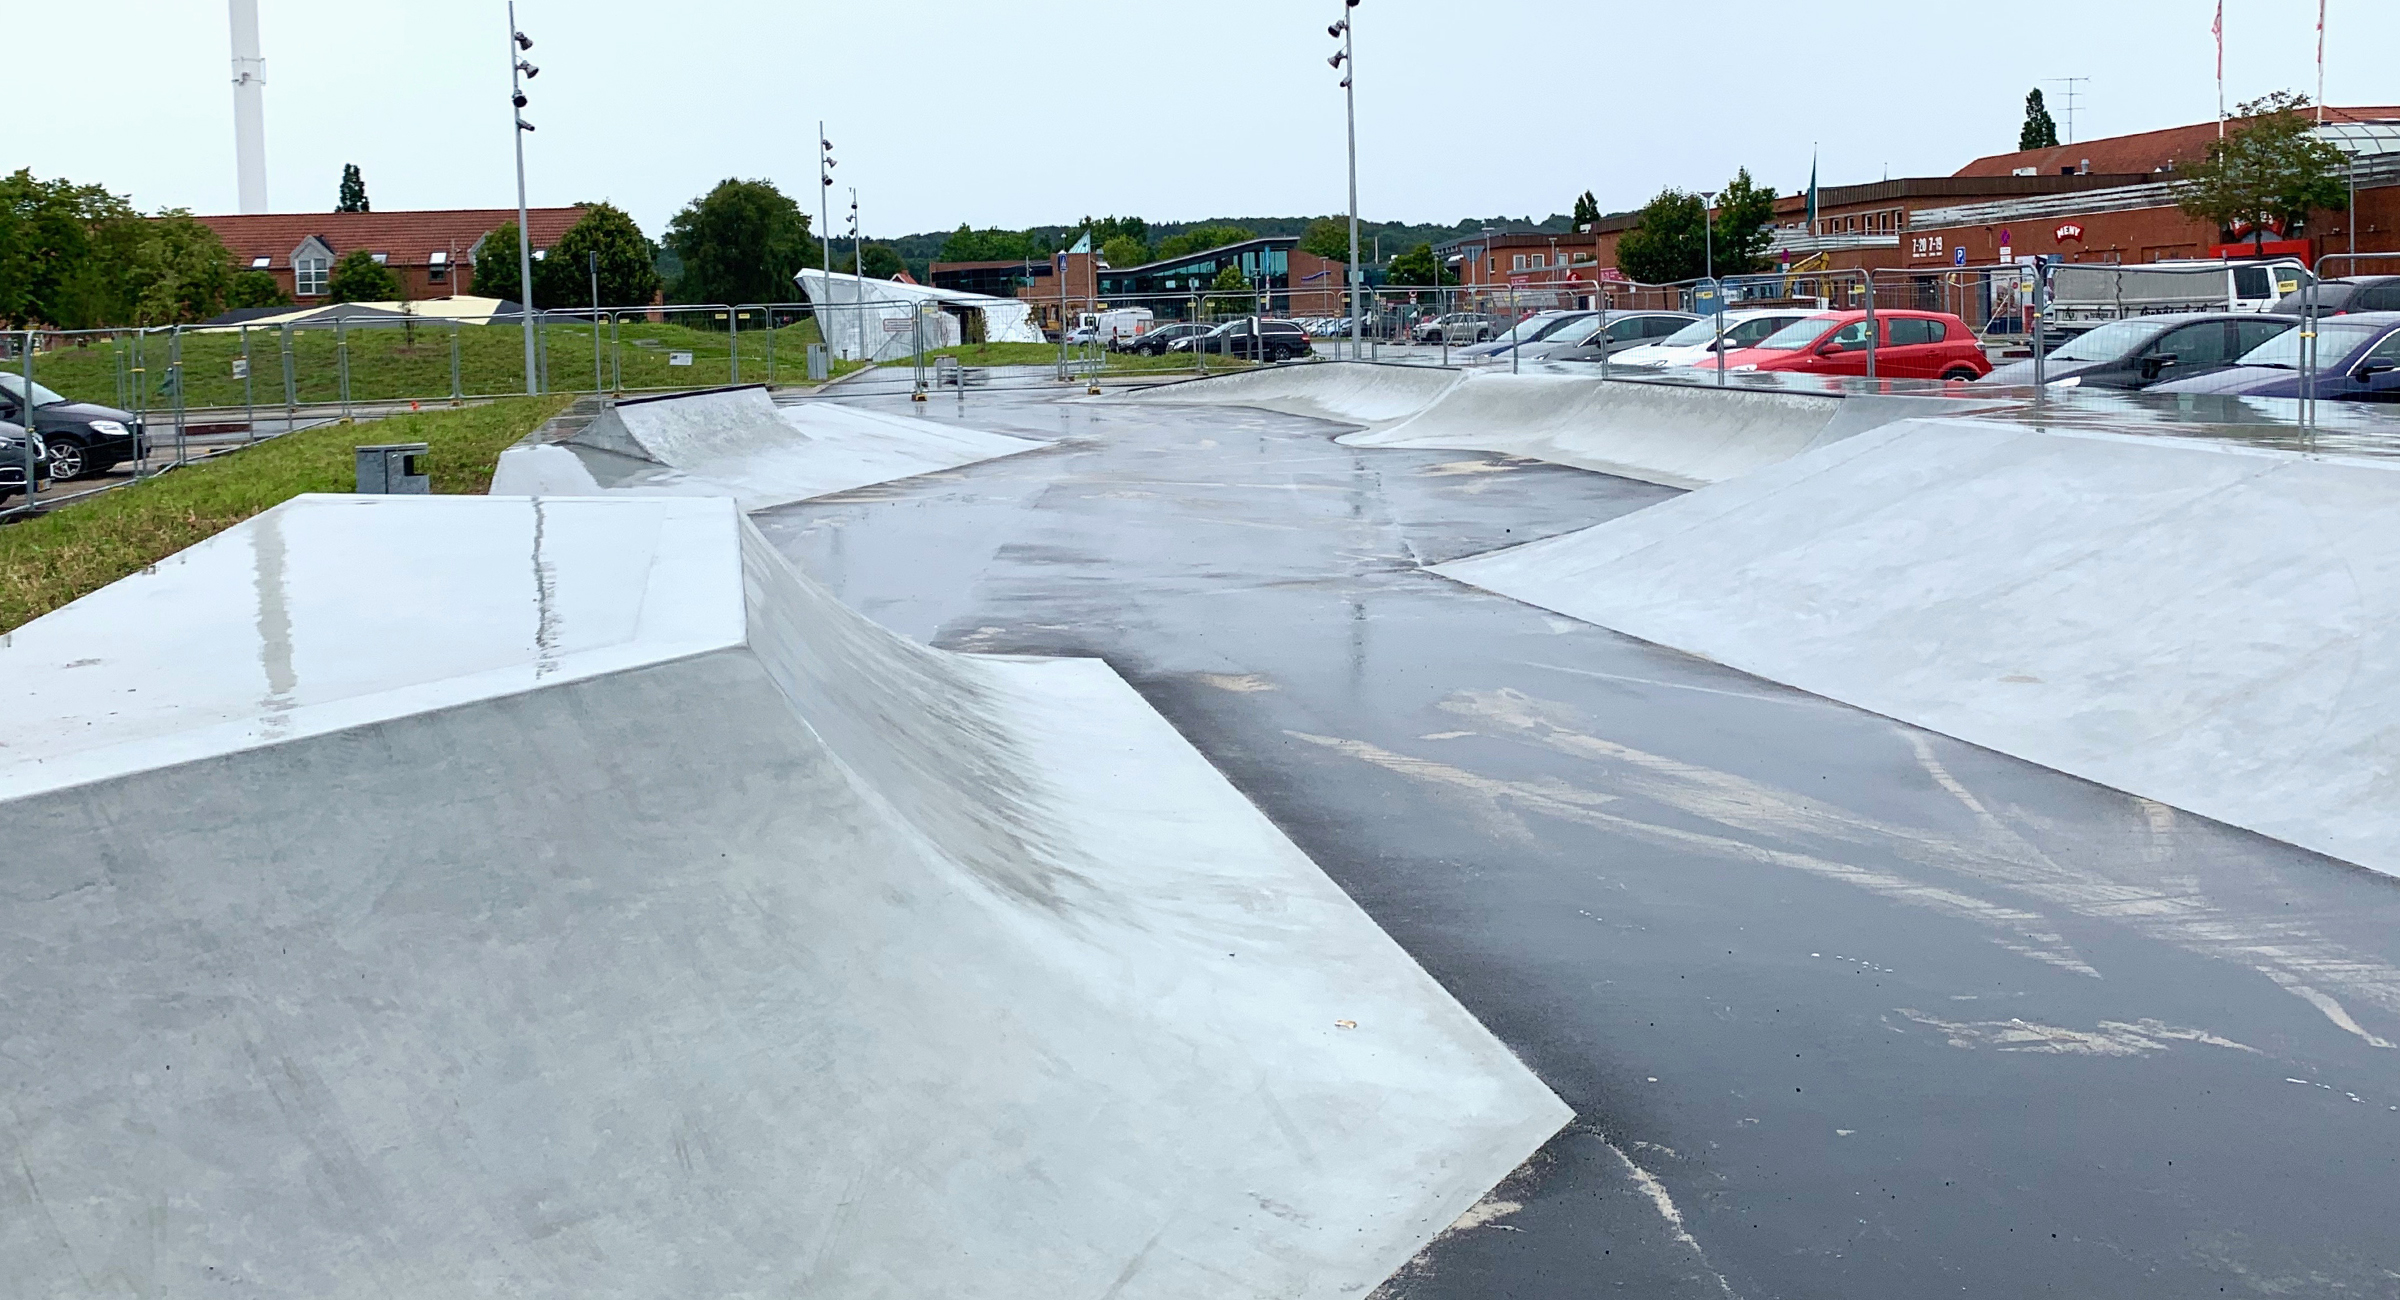 Her ses skateboardramper i beton på Niels Due Jensens Plads i Bjerringbro